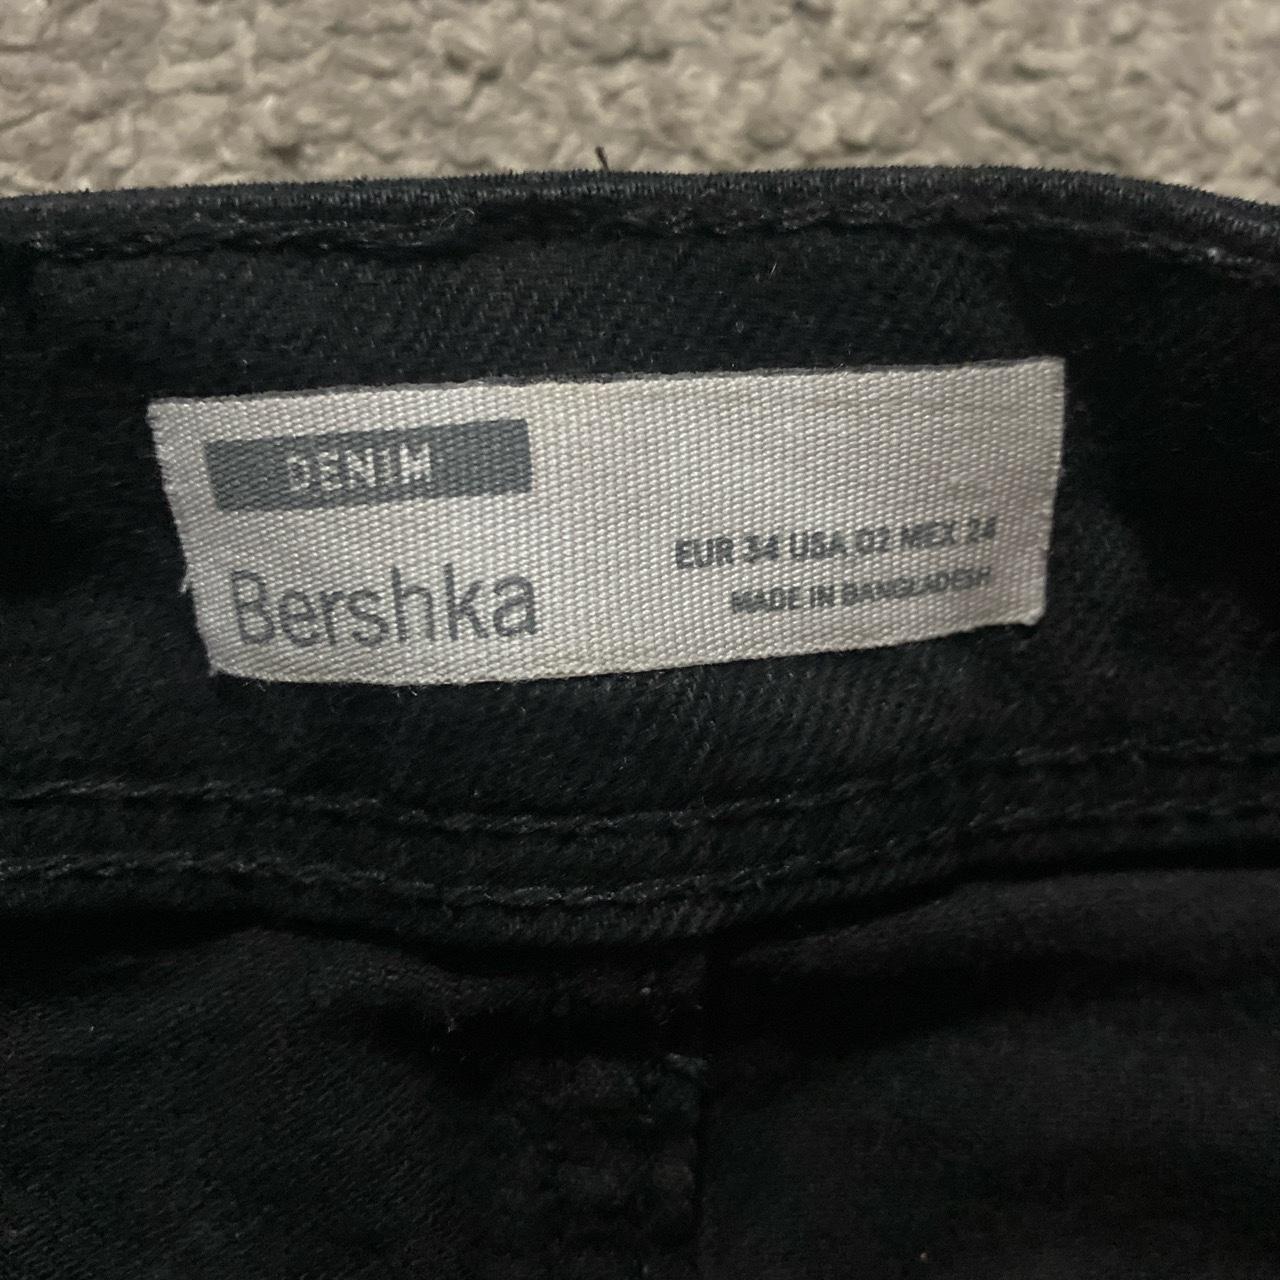 bershka mini skirt uk size 6 with belt buckle worn once - Depop